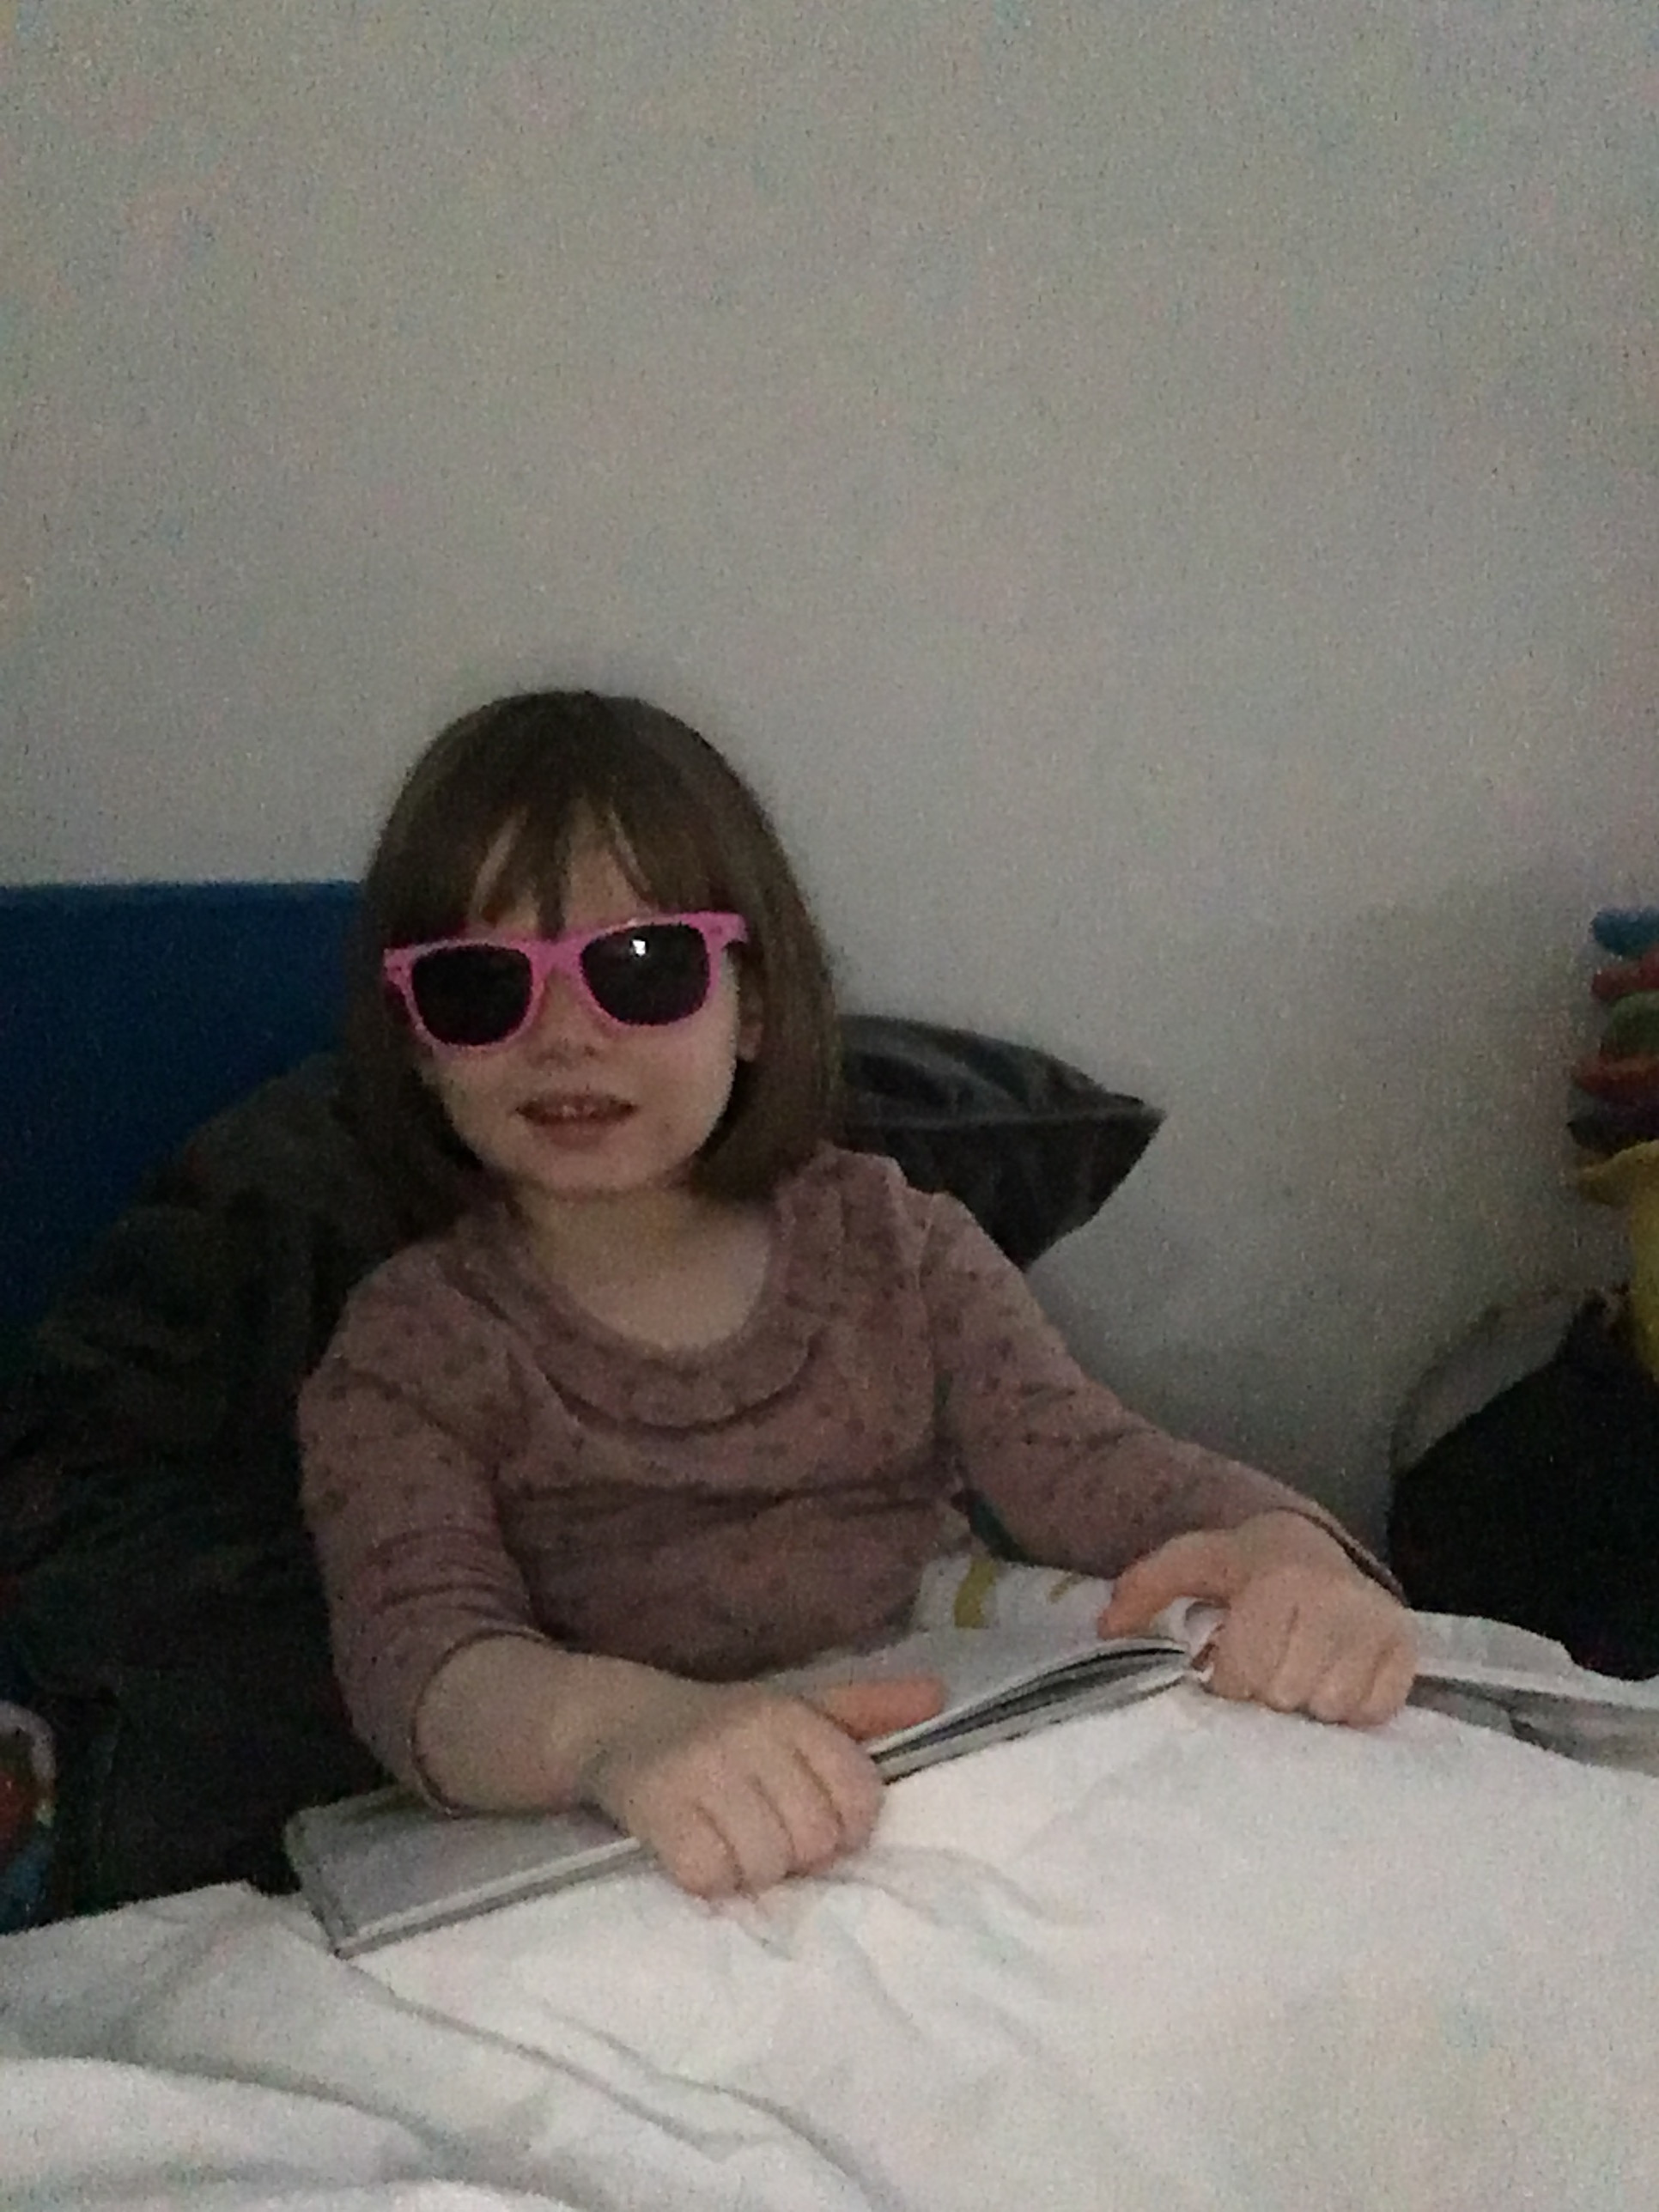 stabil kollision kontakt Femårige Clara lever i mørke med solbriller på | TV2 Østjylland